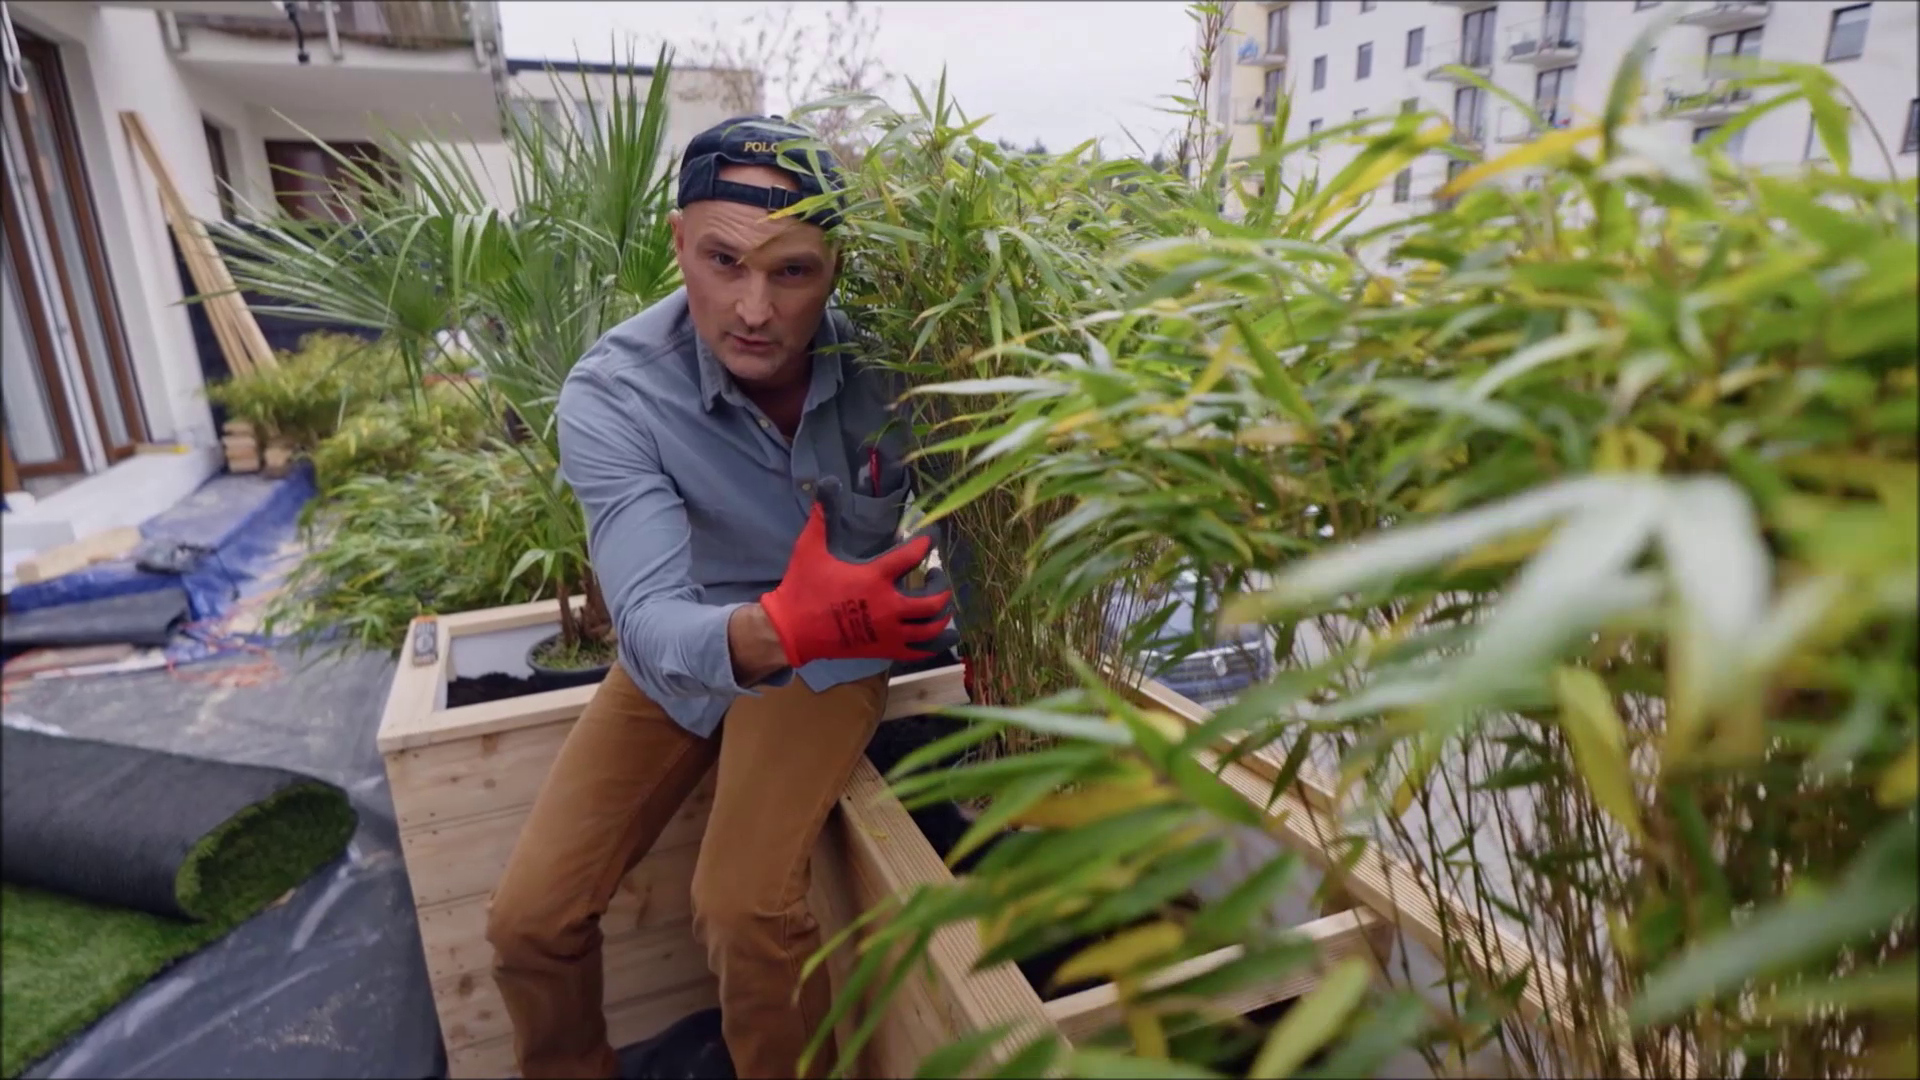 "Polowanie na ogród - tarasy": bambus to roślina idealna na balkony i tarasy